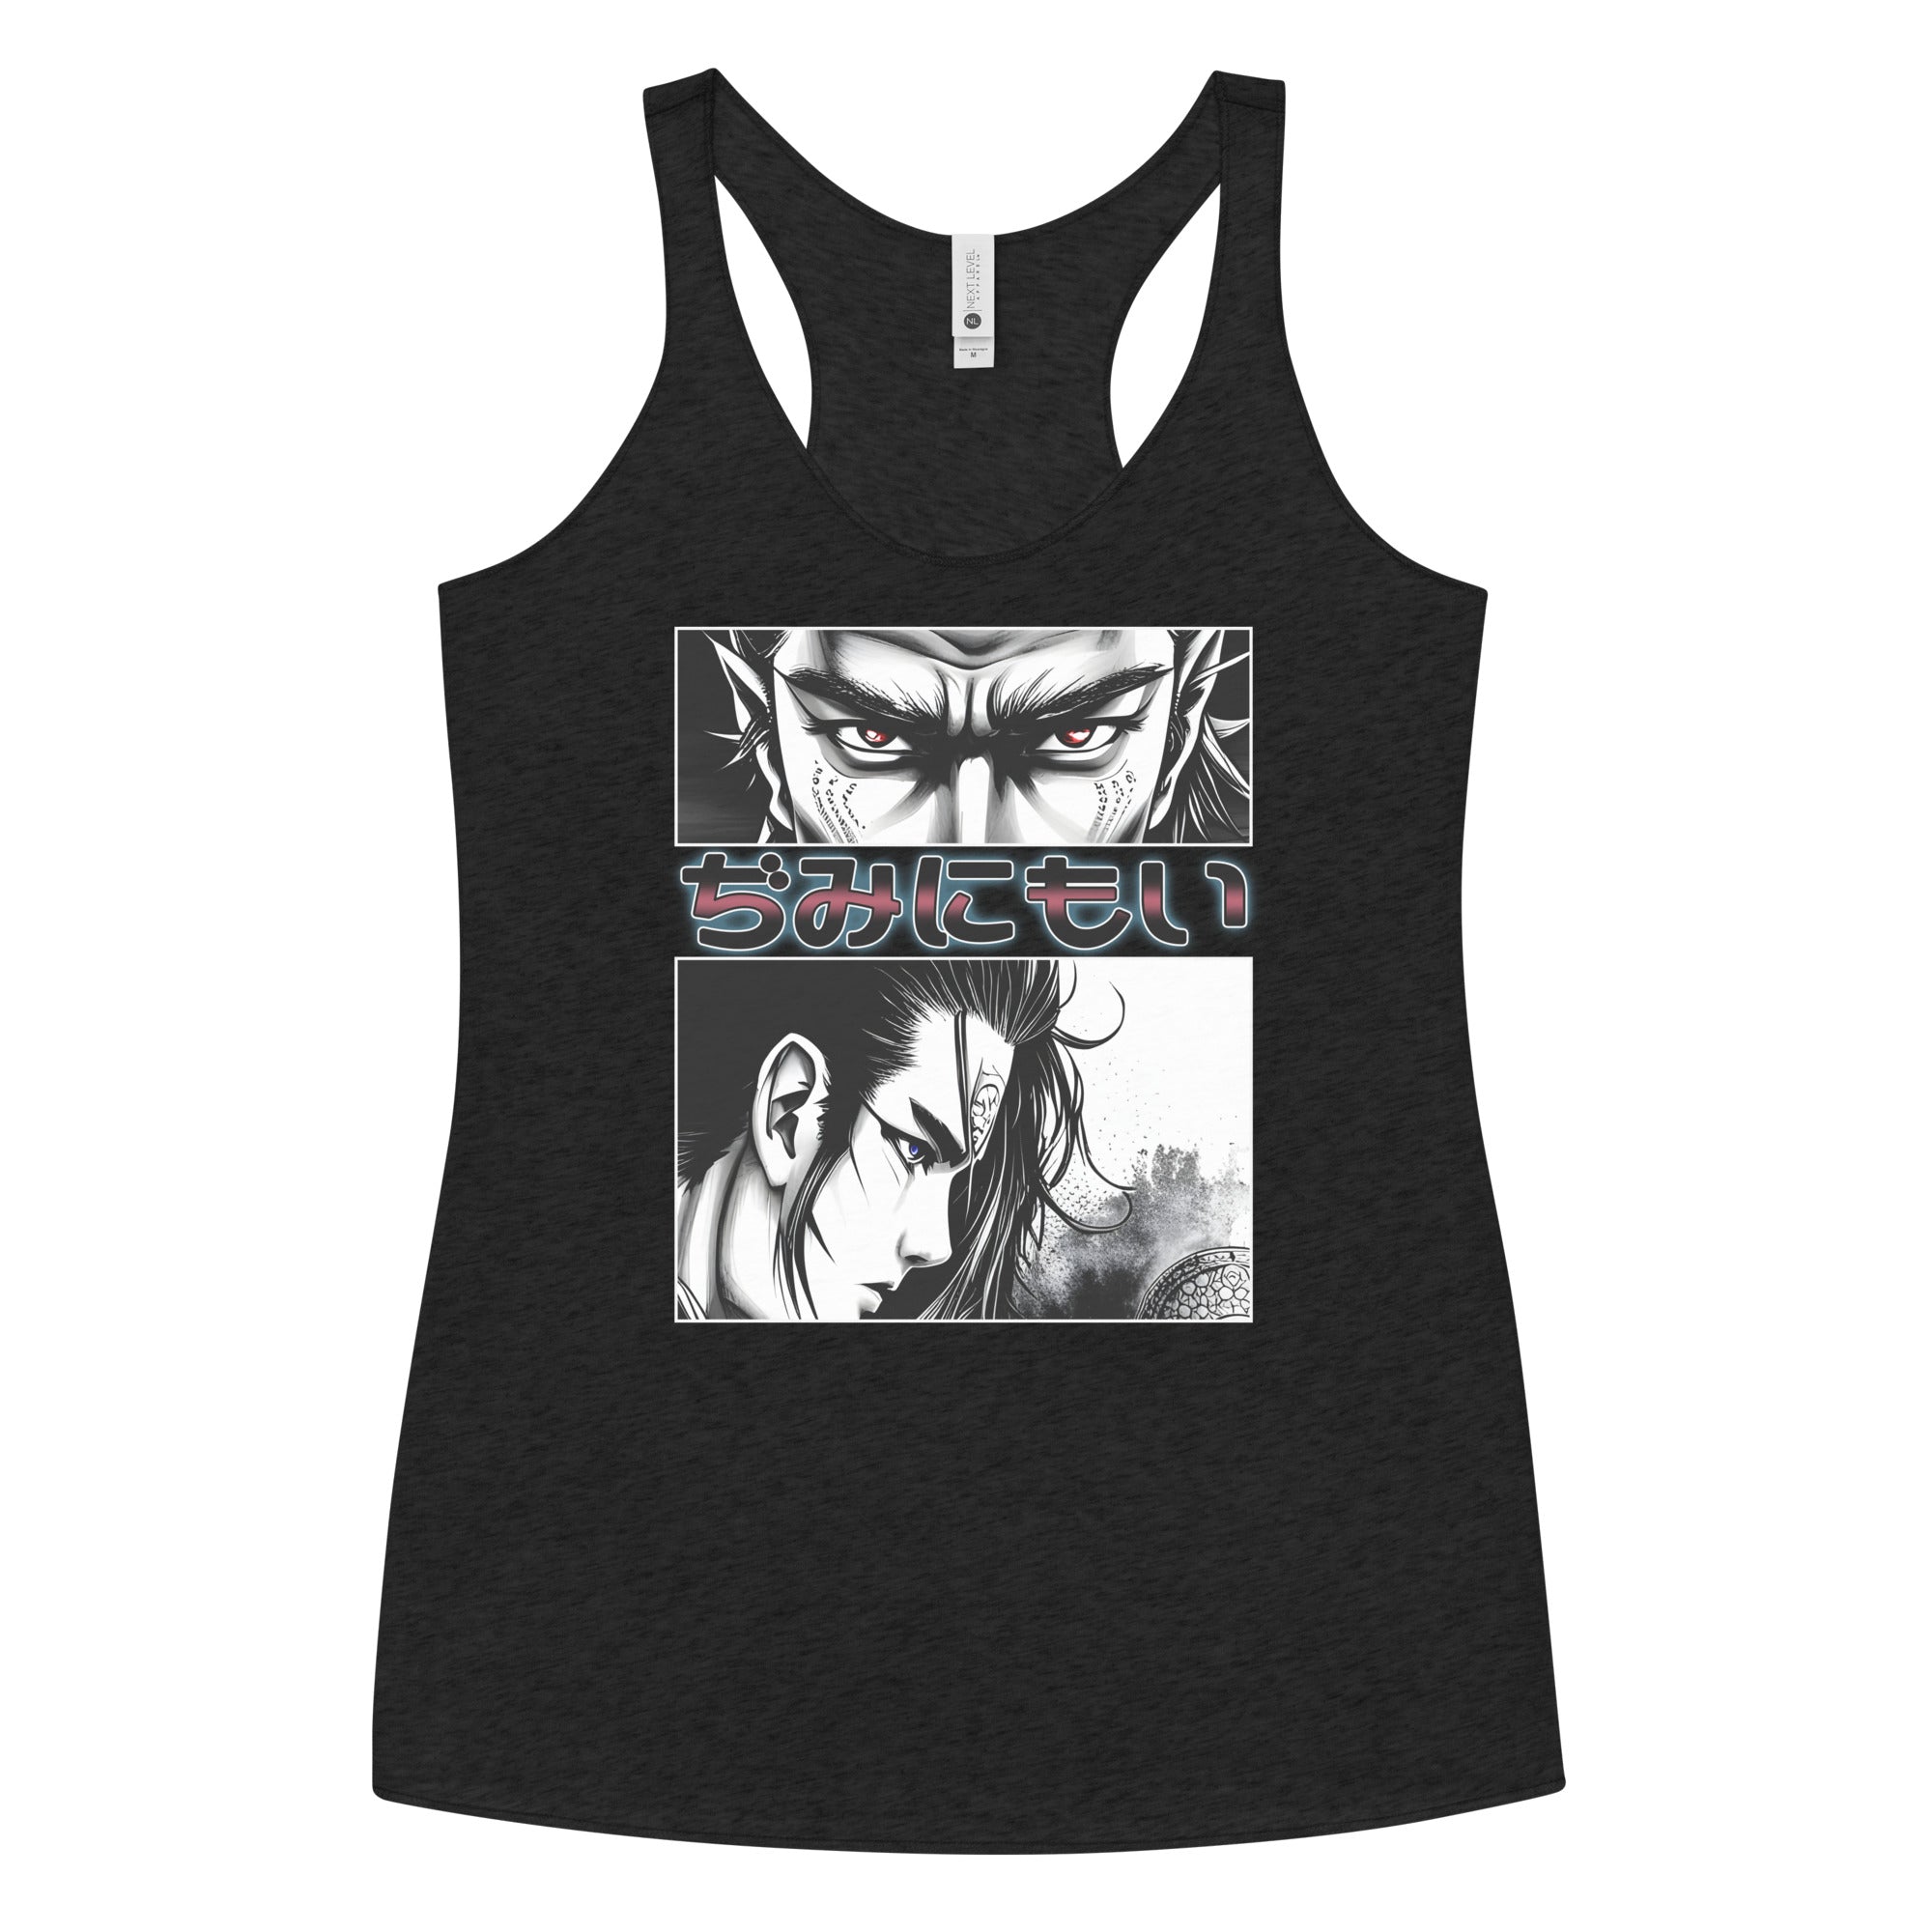 Anime Eyes Japanese Letters Samurai Manga Design Women's Racerback Tank Top Shirt